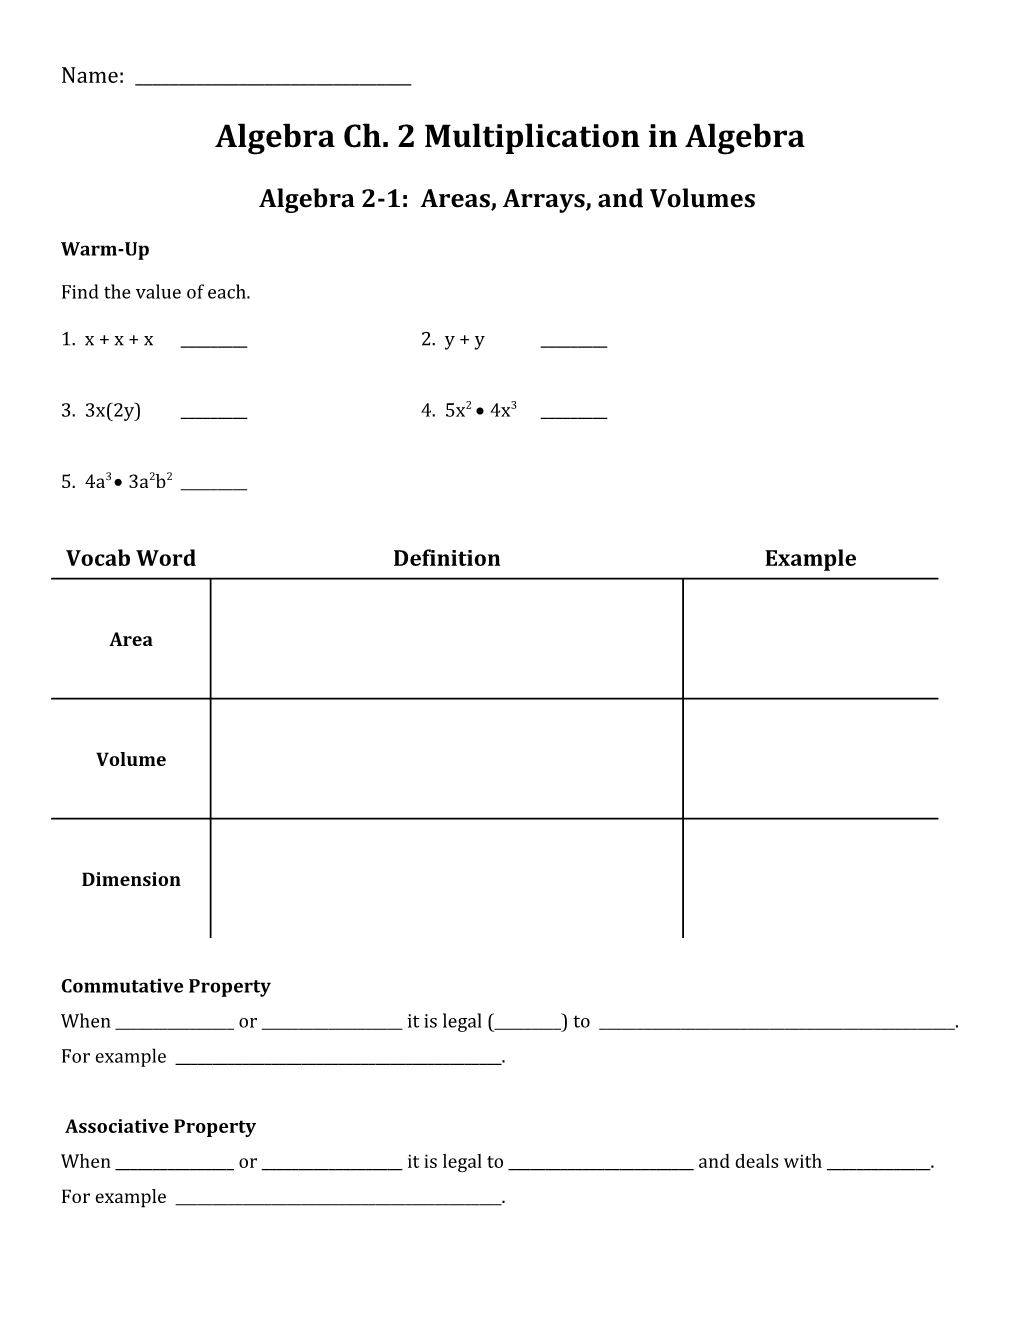 Algebra 2-1: Areas, Arrays, and Volumes